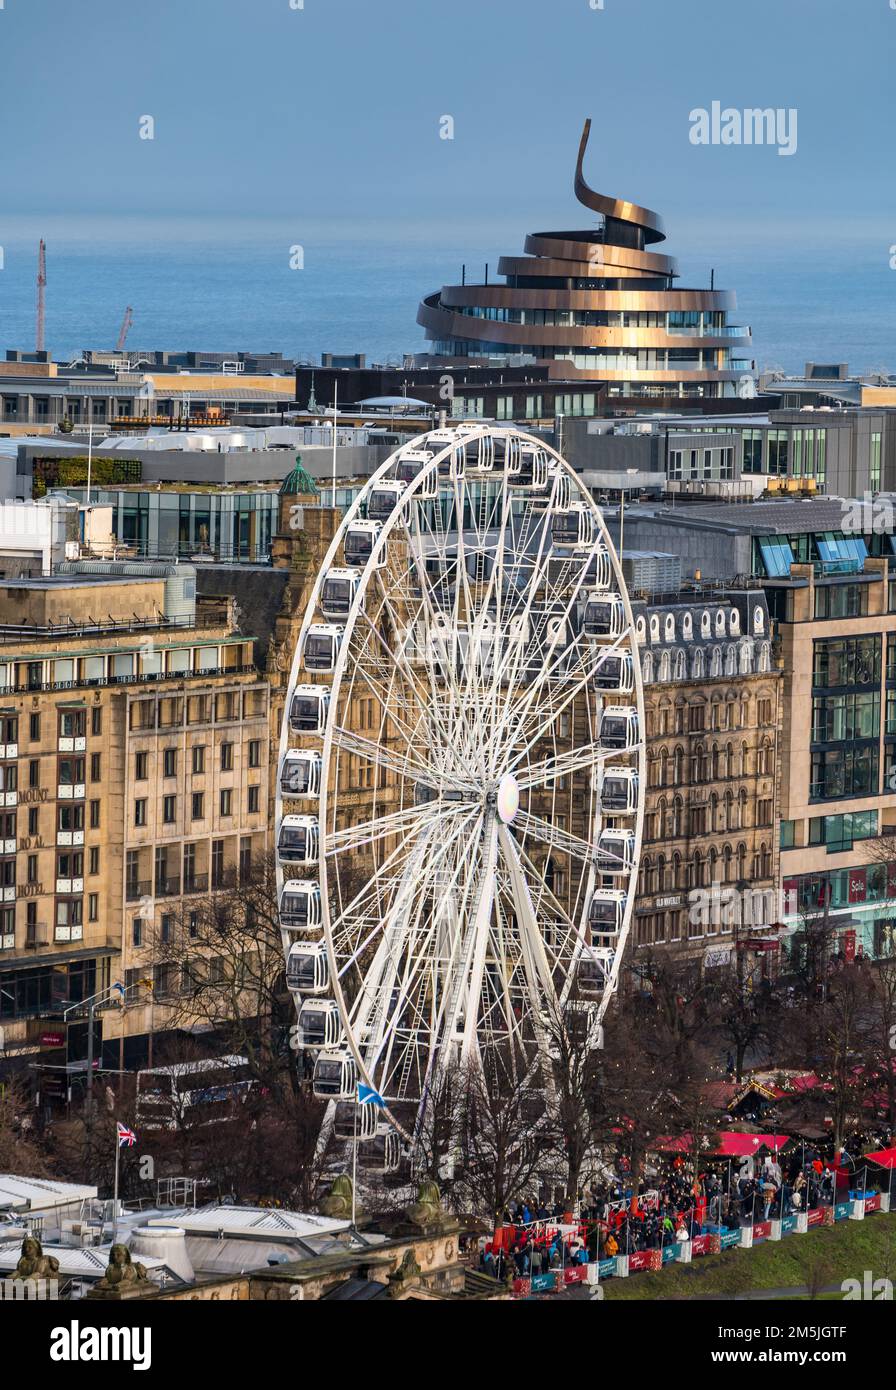 Big Ferris Wheel in Christmas market, Princes Street Gardens, and St James Quarter rooftop, Edinburgh, Scotland, UK Stock Photo